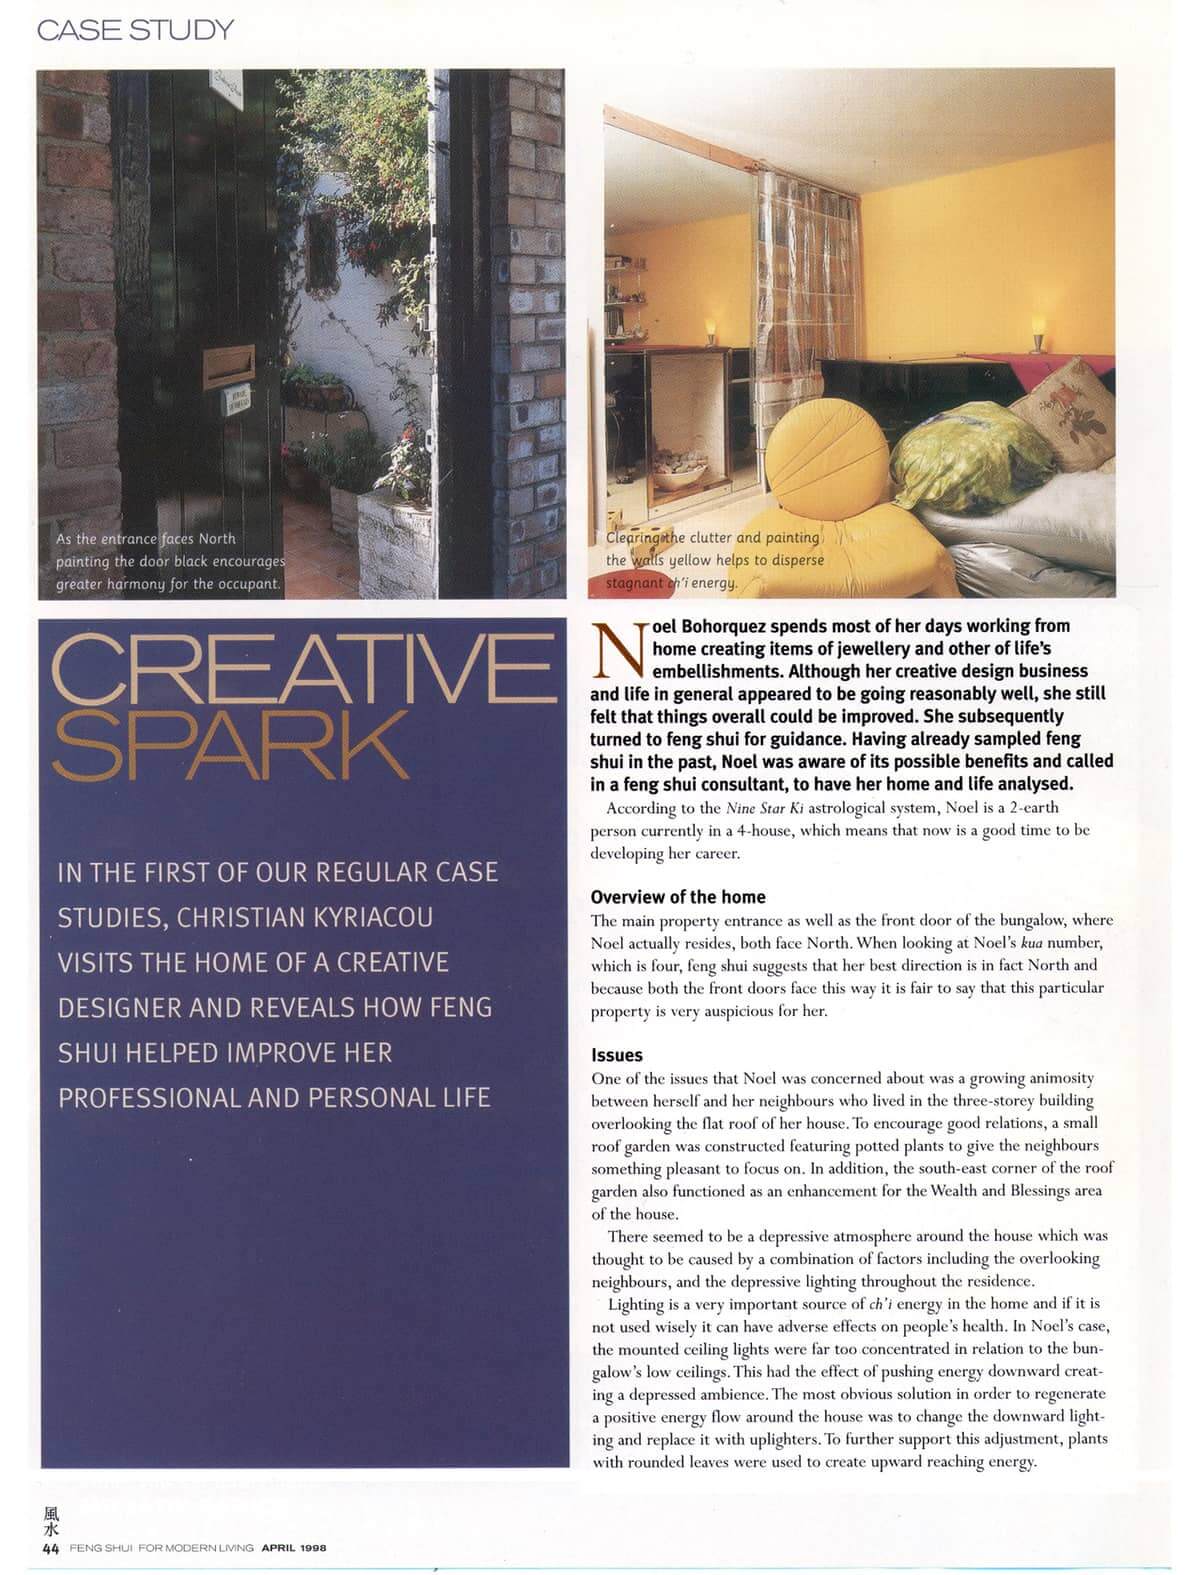 Creative Spark Article - Pg 1 - The House Whisperer